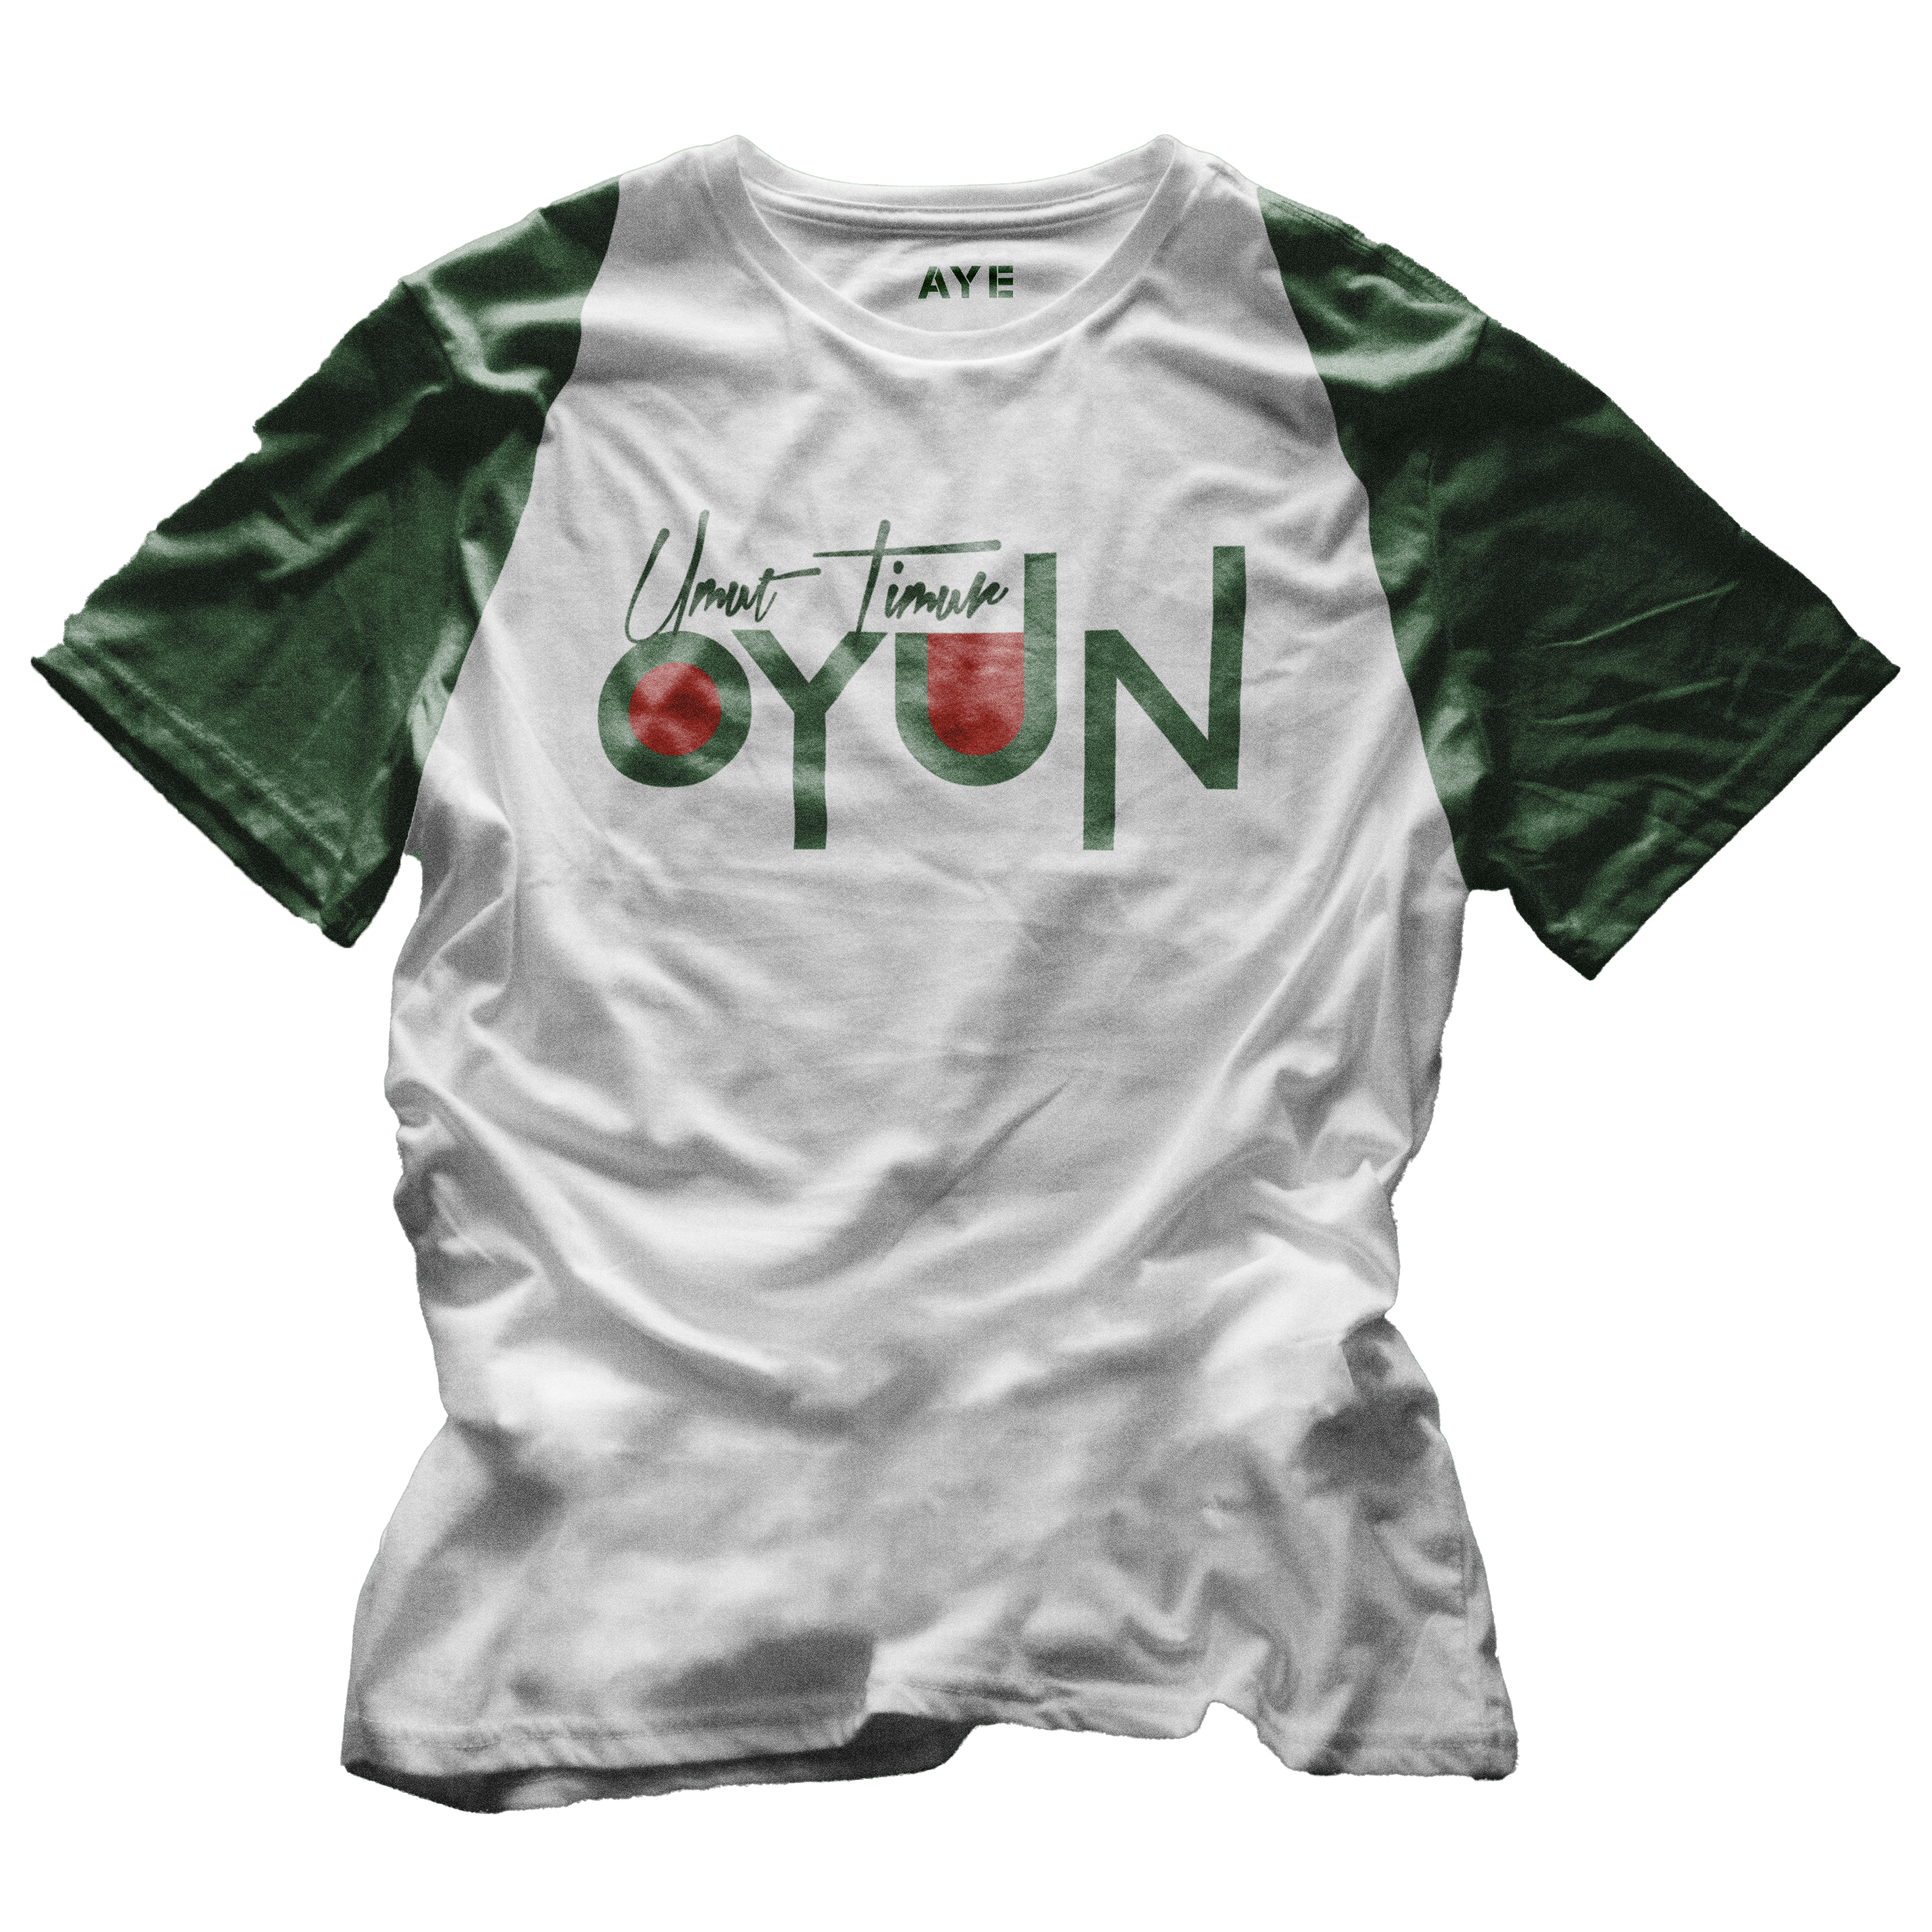 Oyun T-shirt - Umut Timur